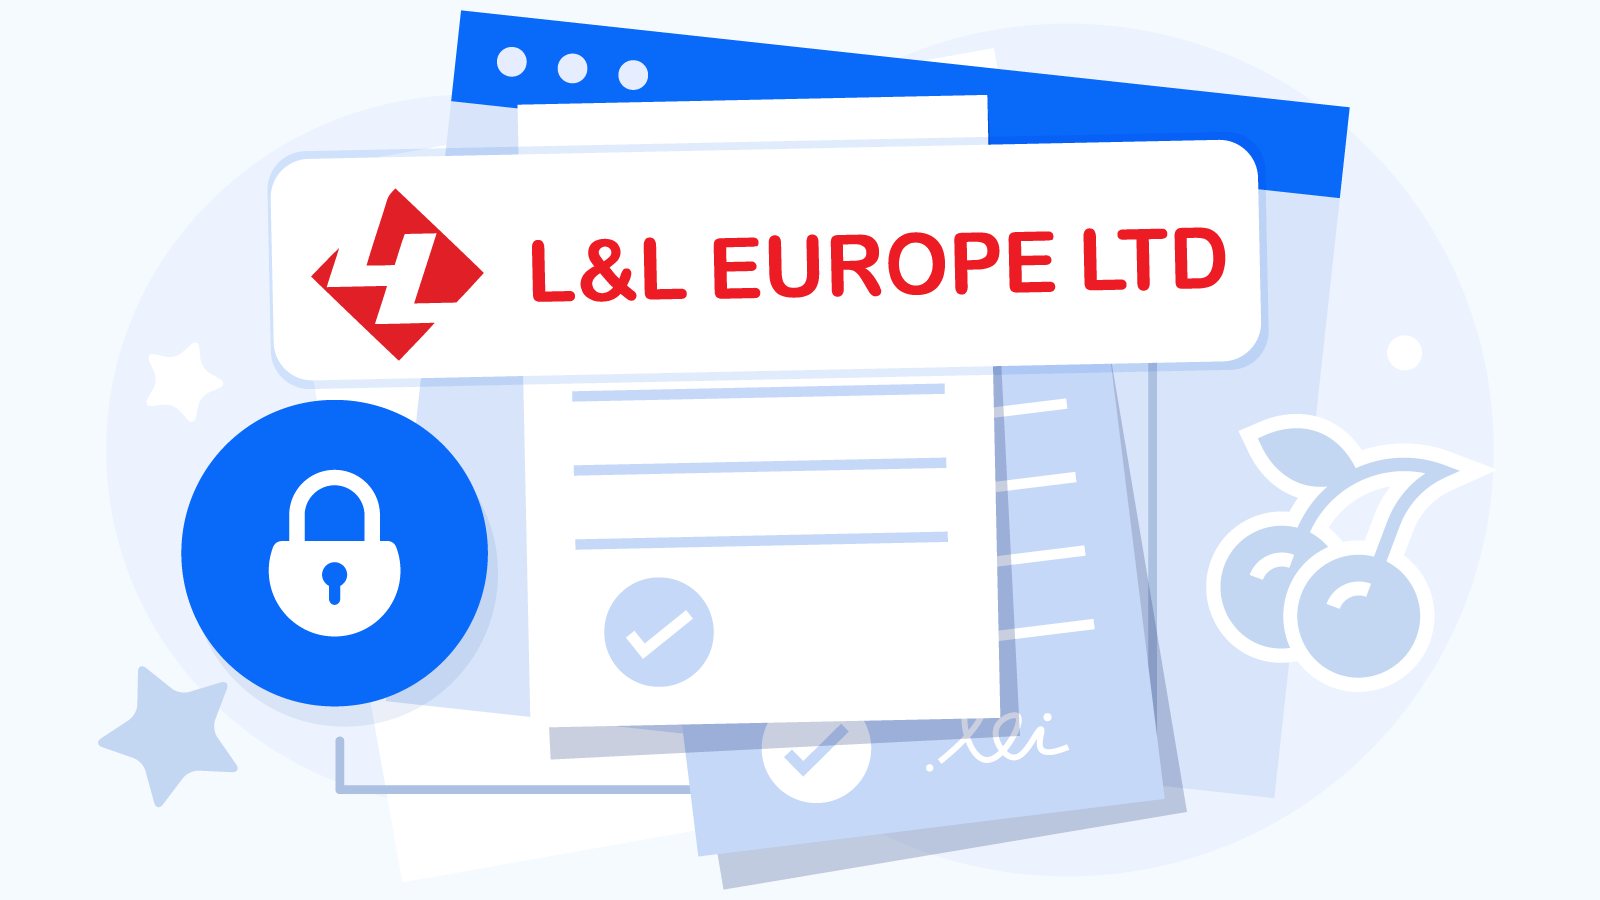 Regulatory & Security Certifications of L&L Europe